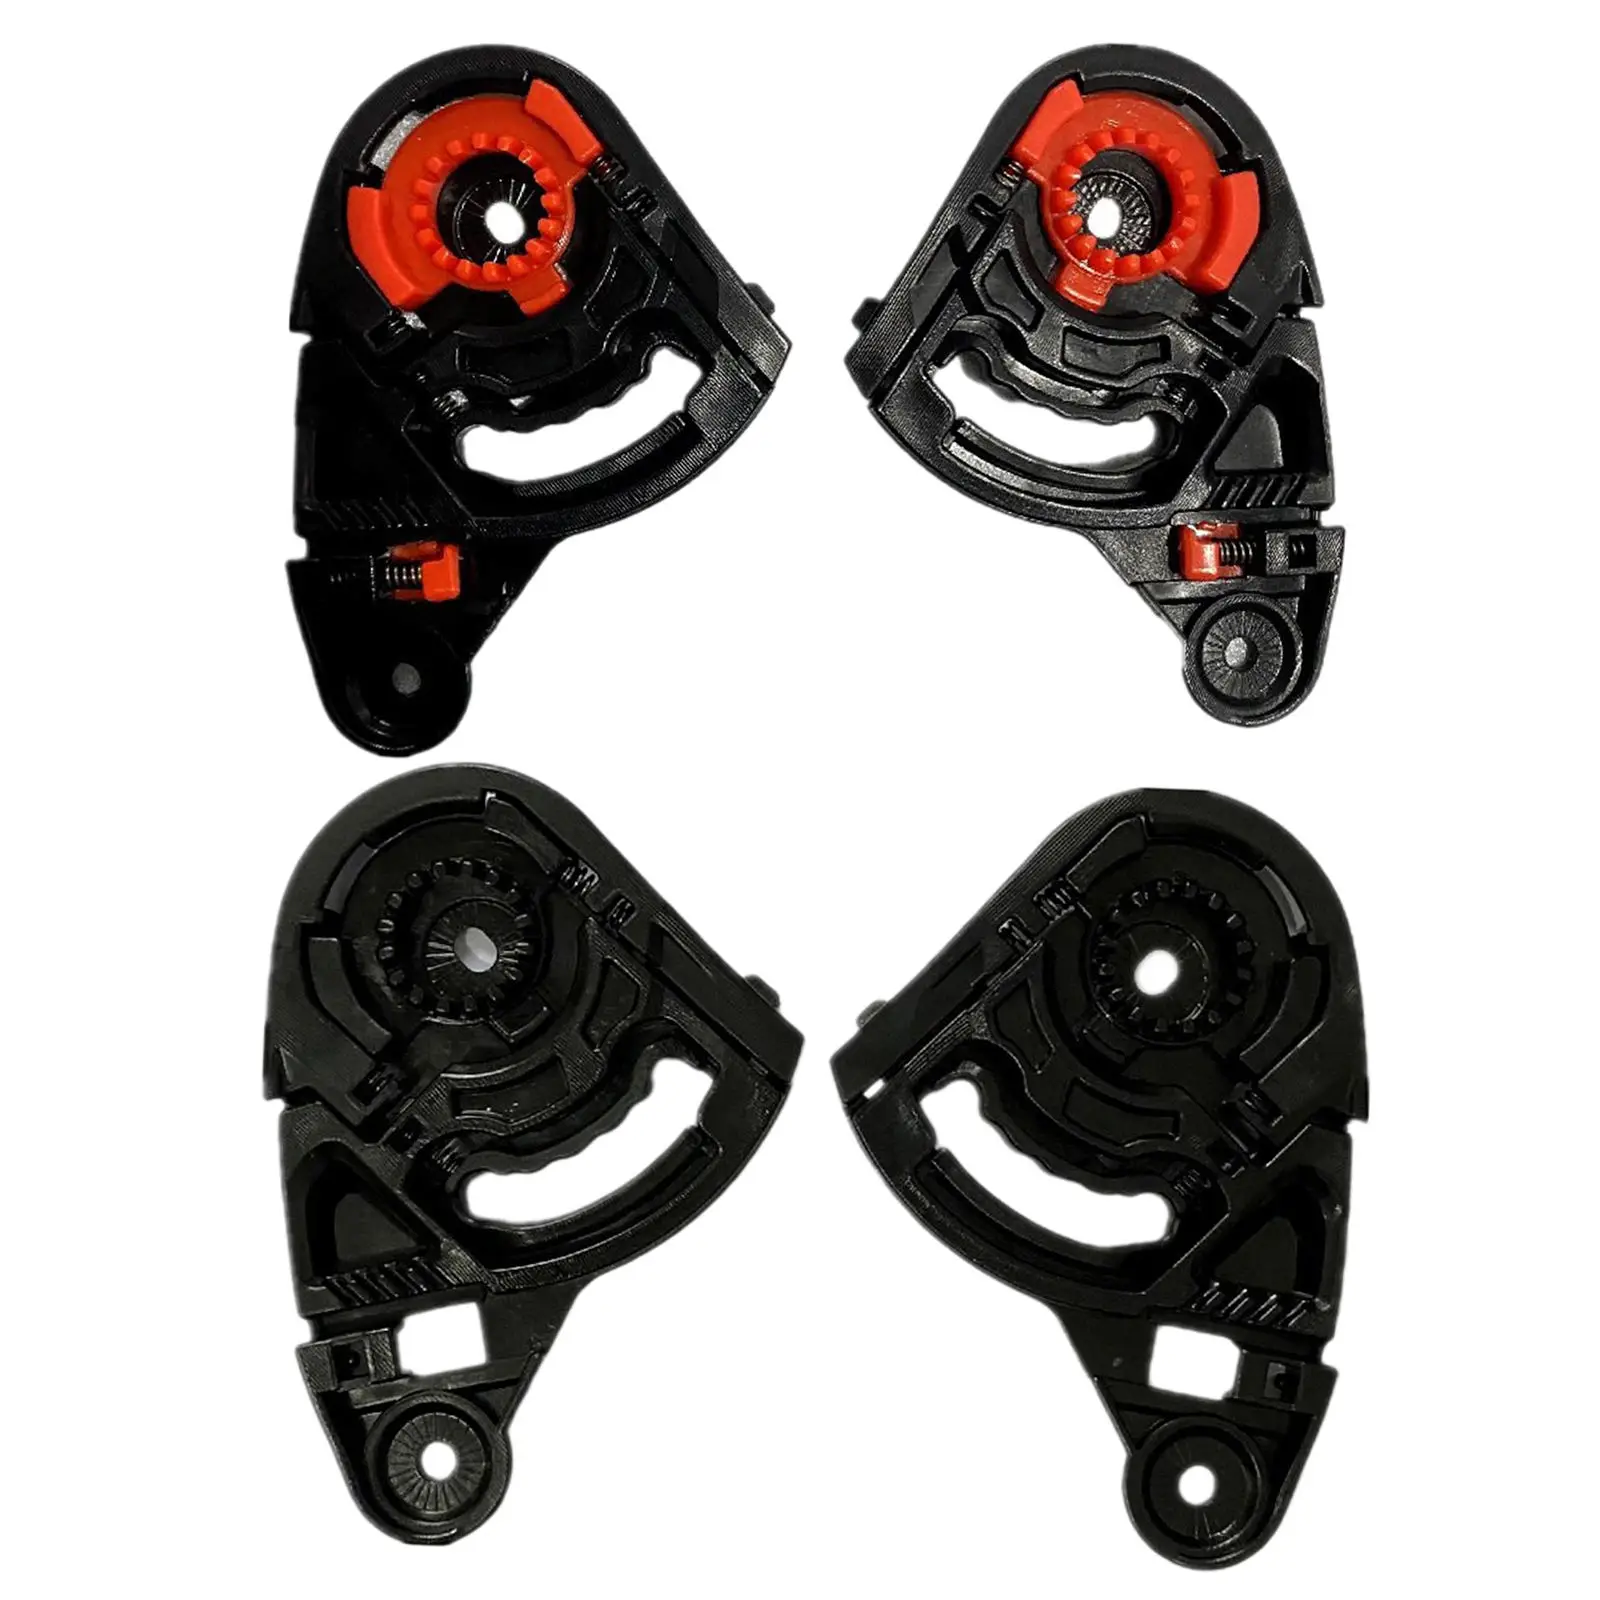 Motorcycle Helmet Gear Plate/Ratchet Set Shield Plastic Case Fit for MT , Blade2 Revenge2 Rapide Bike Racing